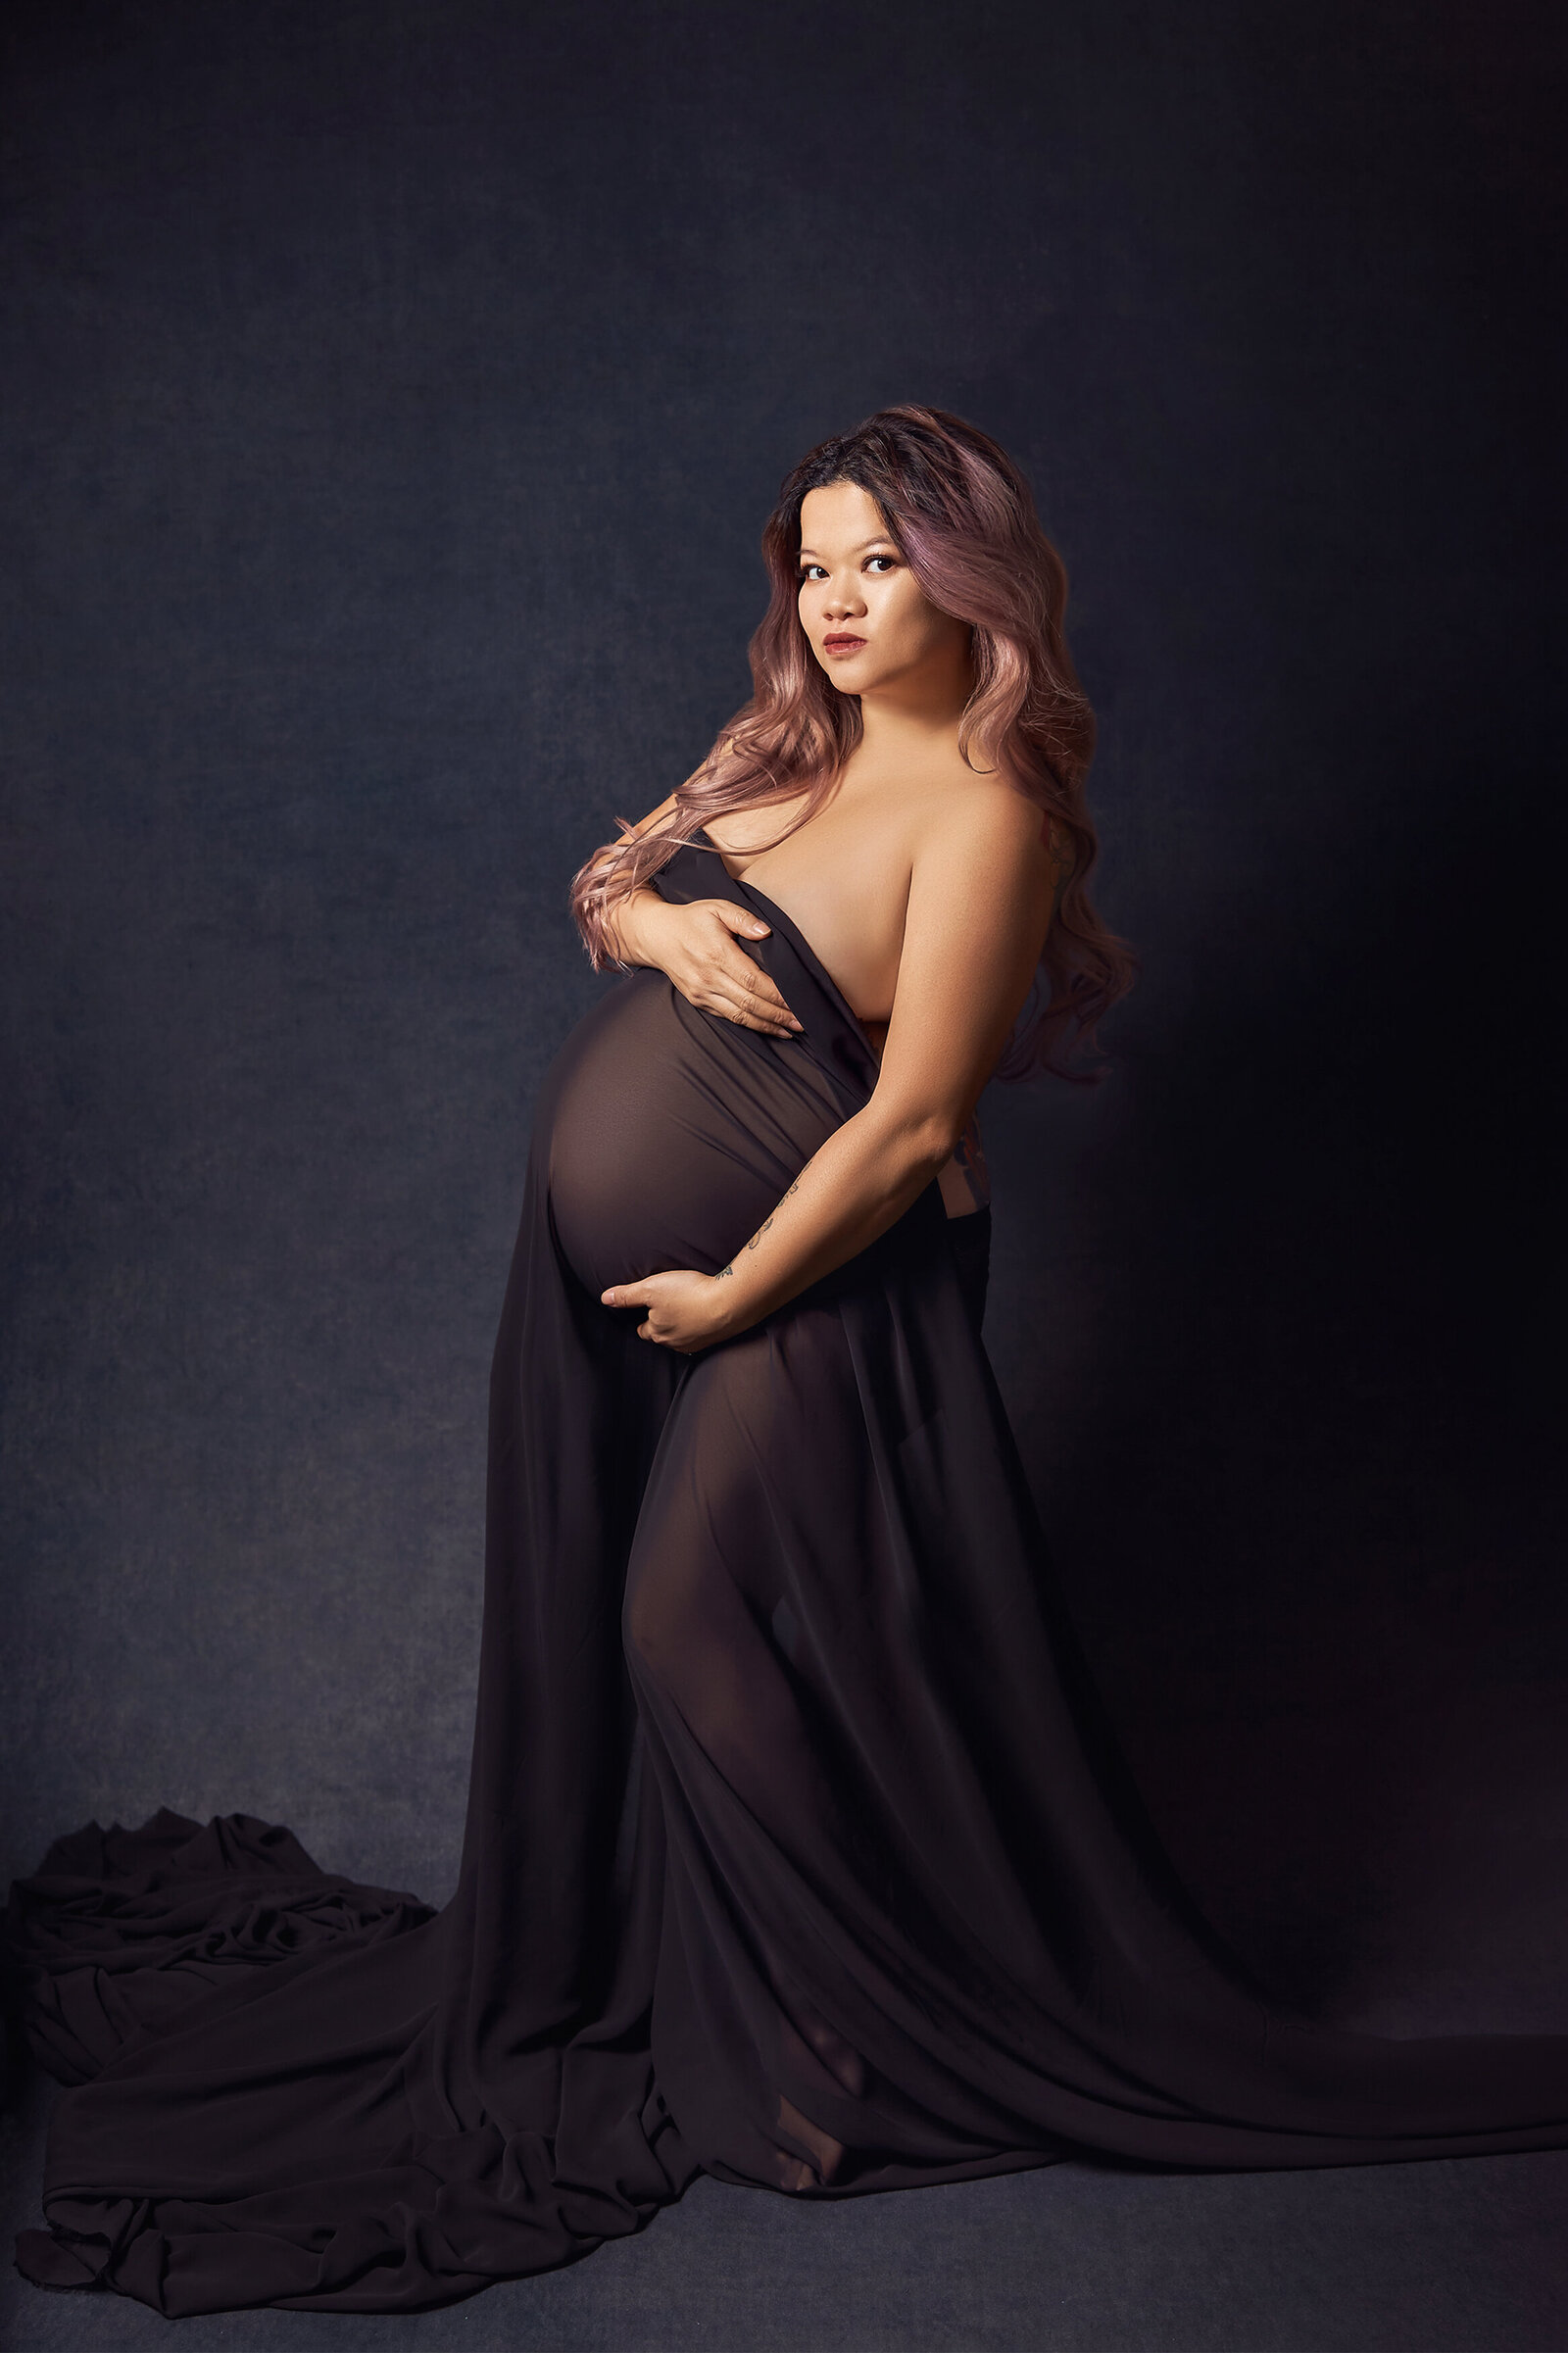 atlanta-best-award-winning-maternity-pregnancy-portrait-studio-glamour-nude-sheer-black-couture-photography-photographer-twin-rivers